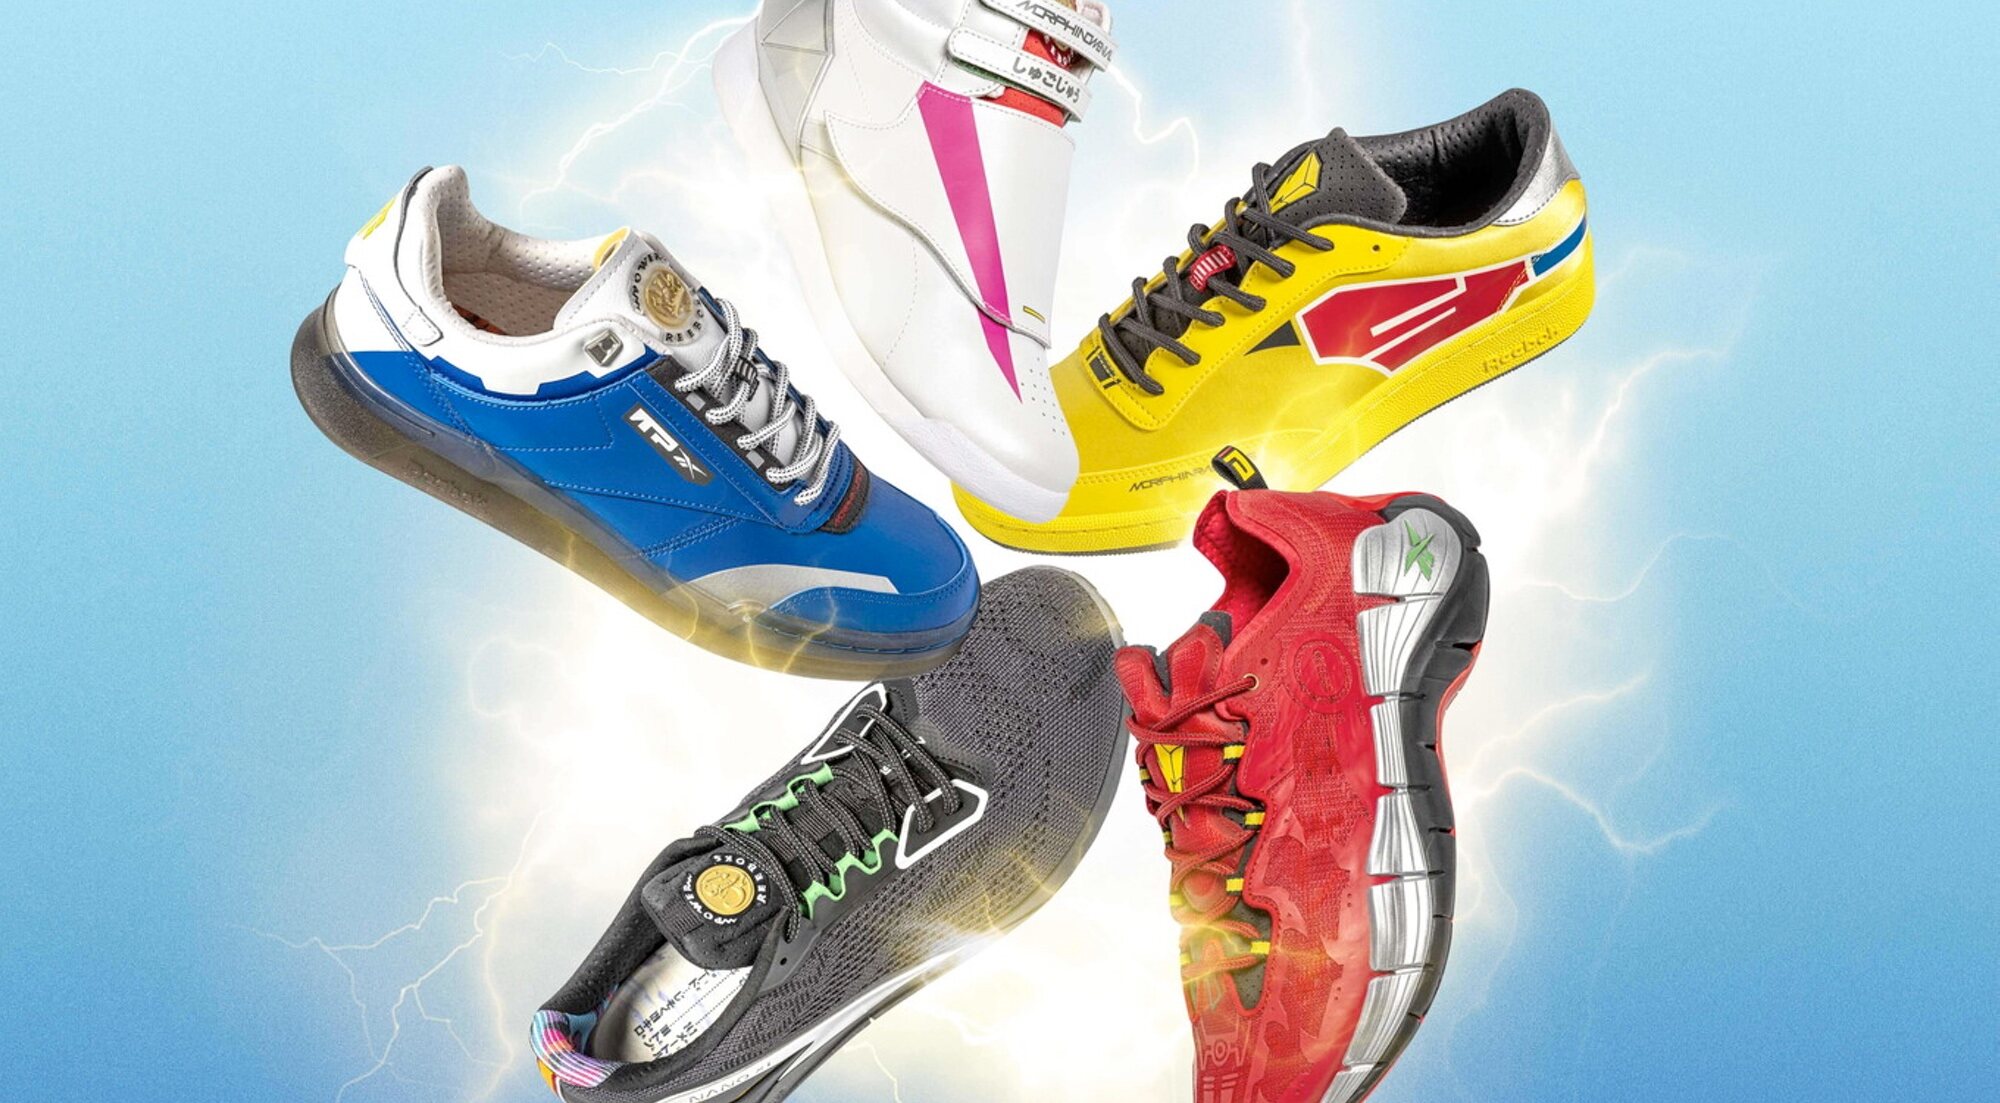 Colección de zapatillas Reebok x Power Rangers